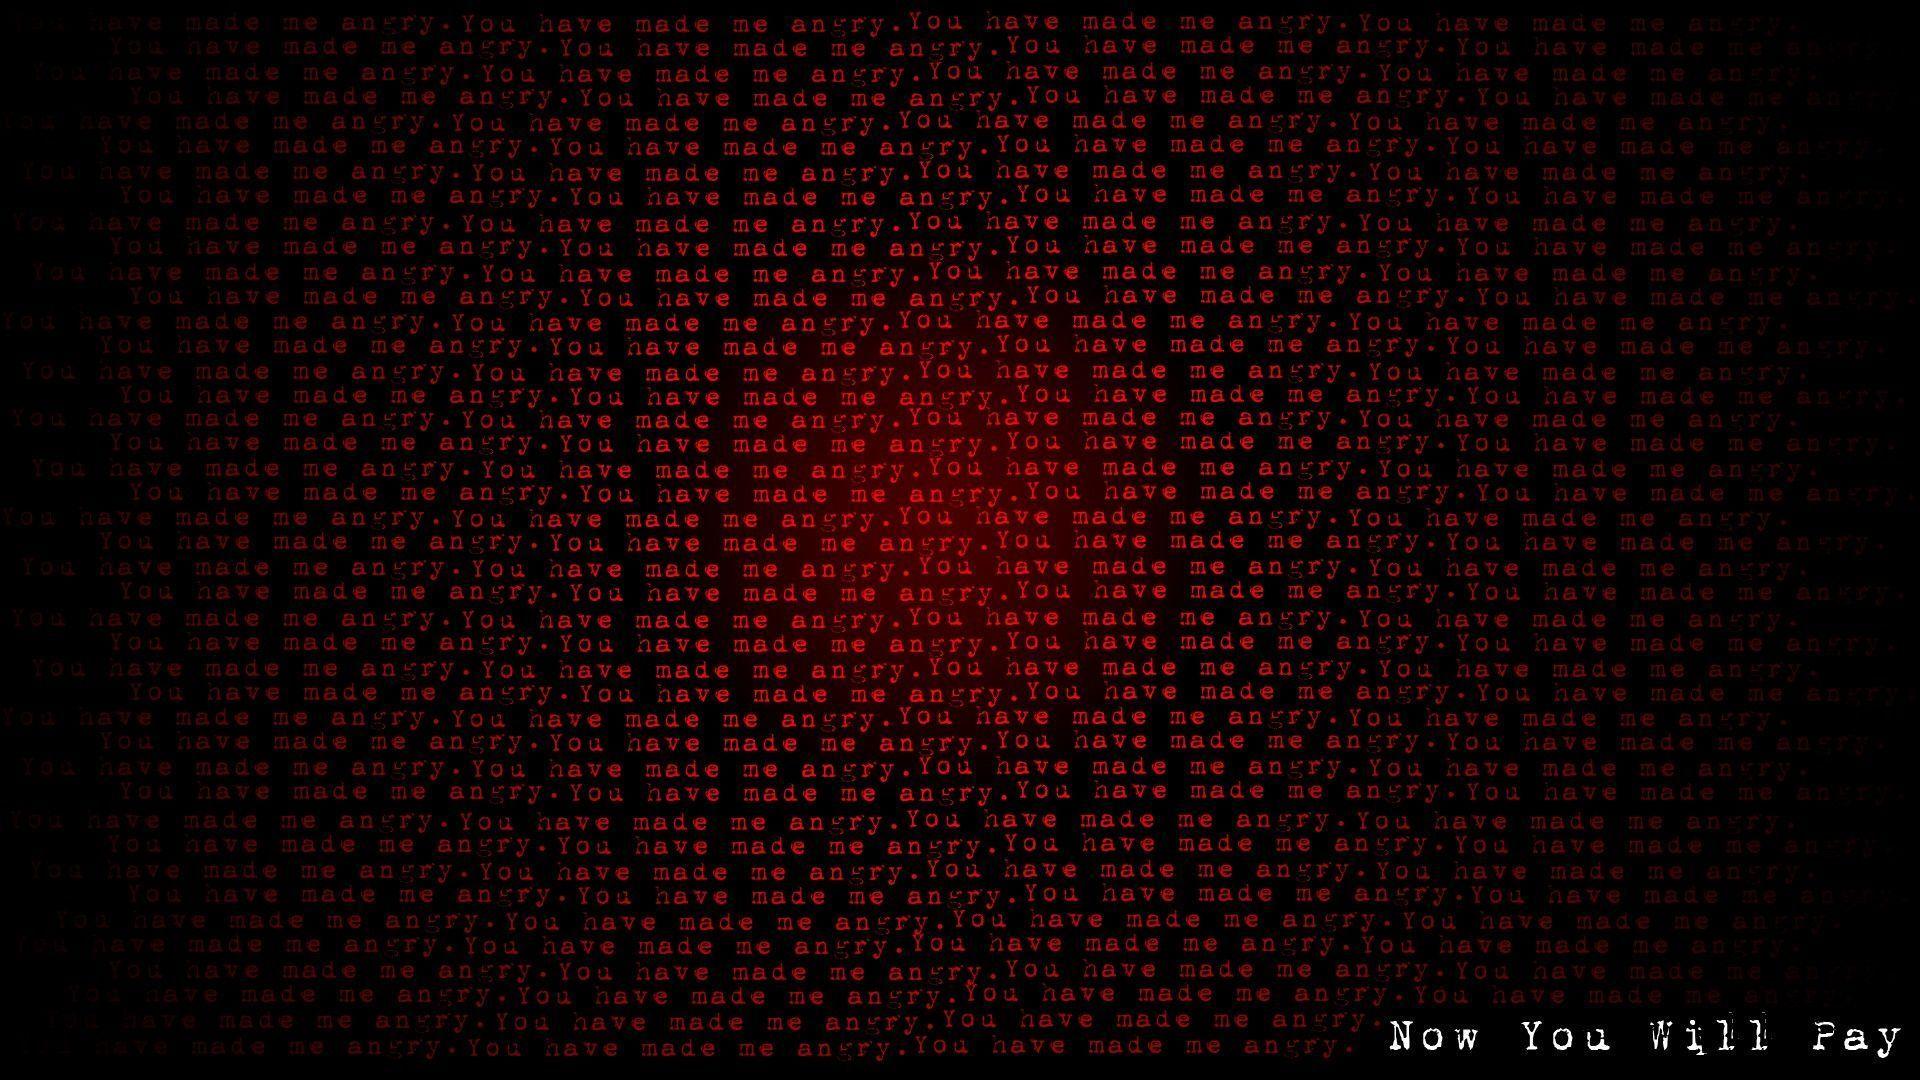 Dark Red HD Wallpaper